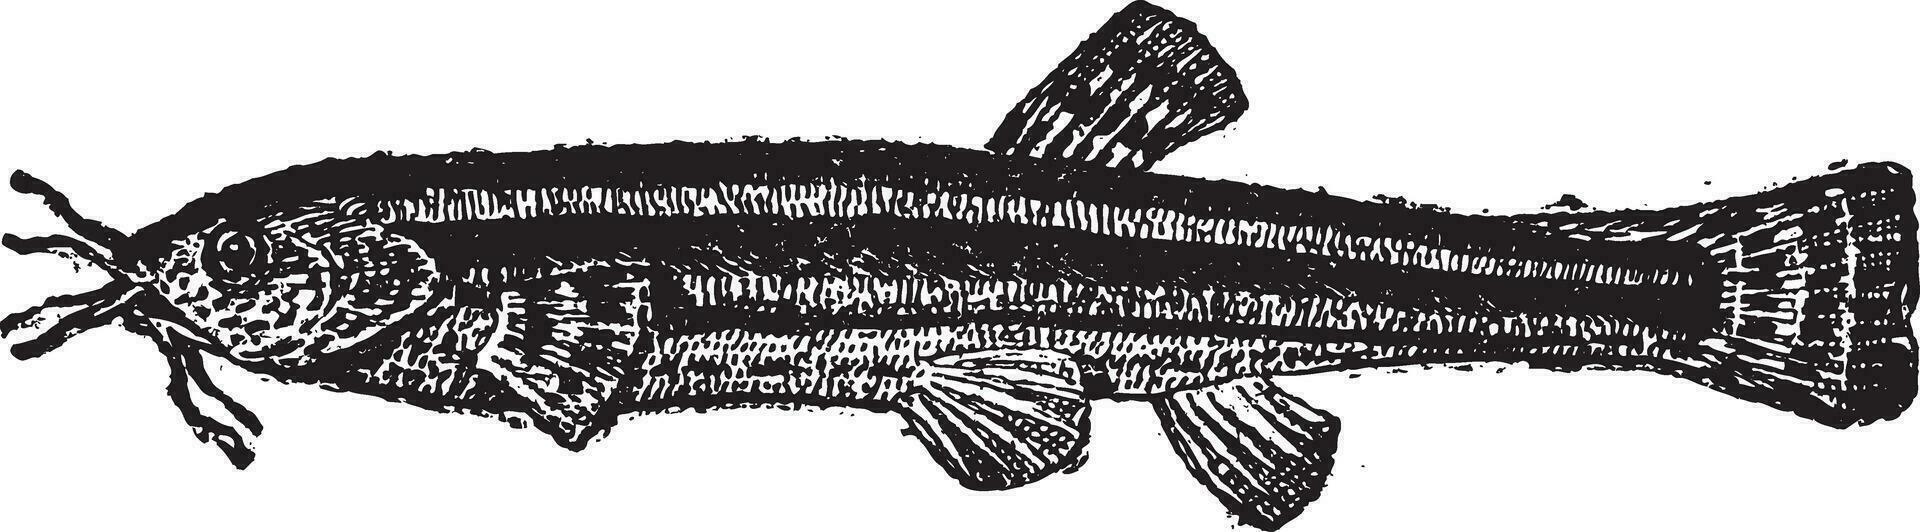 Loach catfish or Amphiliidae, vintage engraving vector